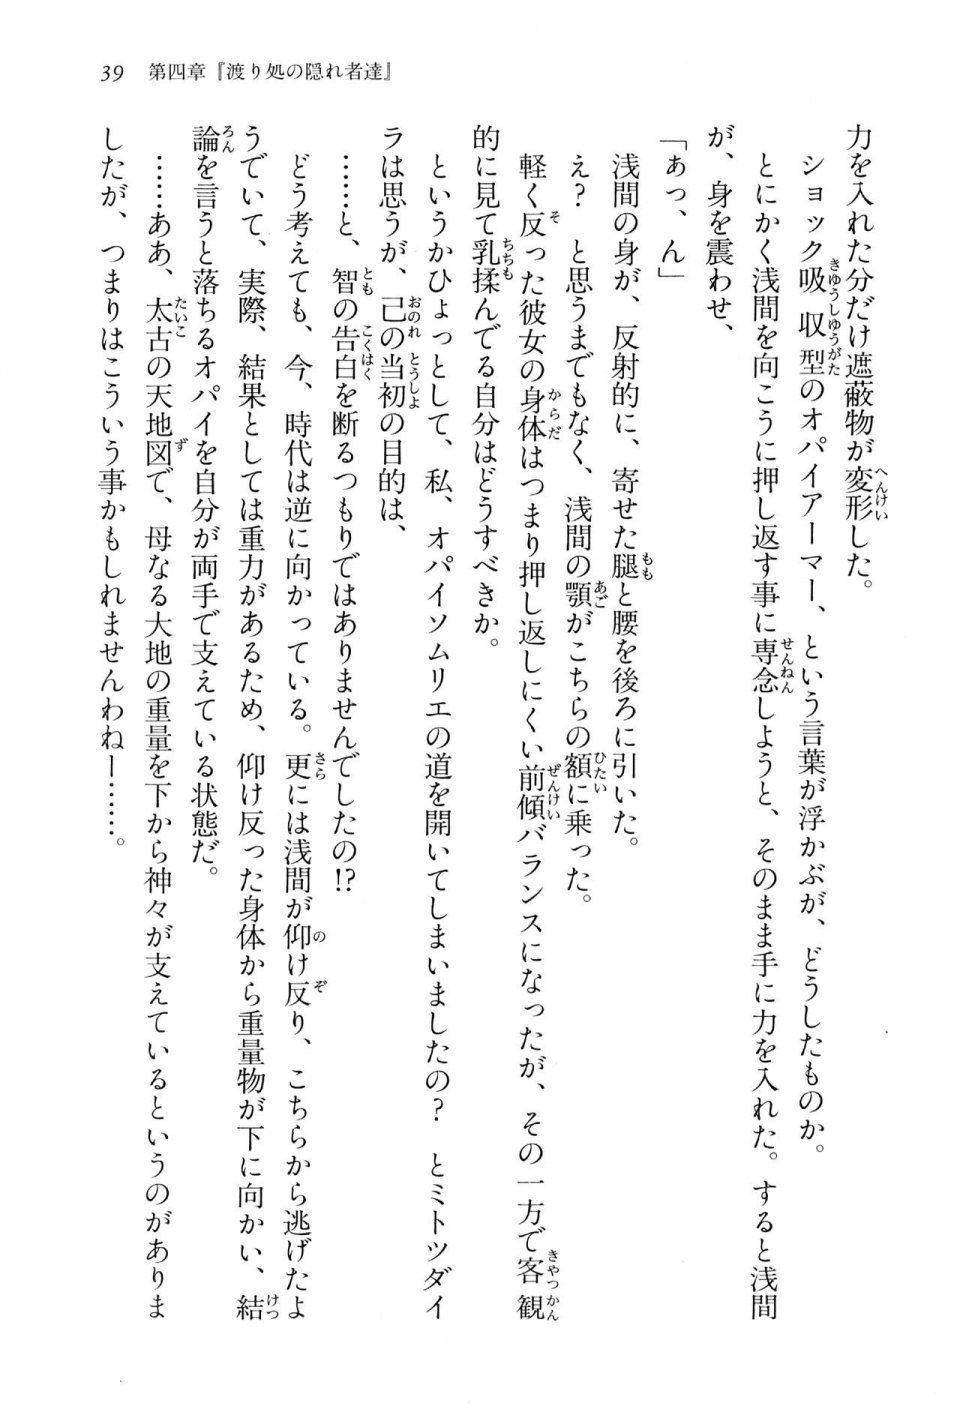 Kyoukai Senjou no Horizon BD Special Mininovel Vol 2(1B) - Photo #43